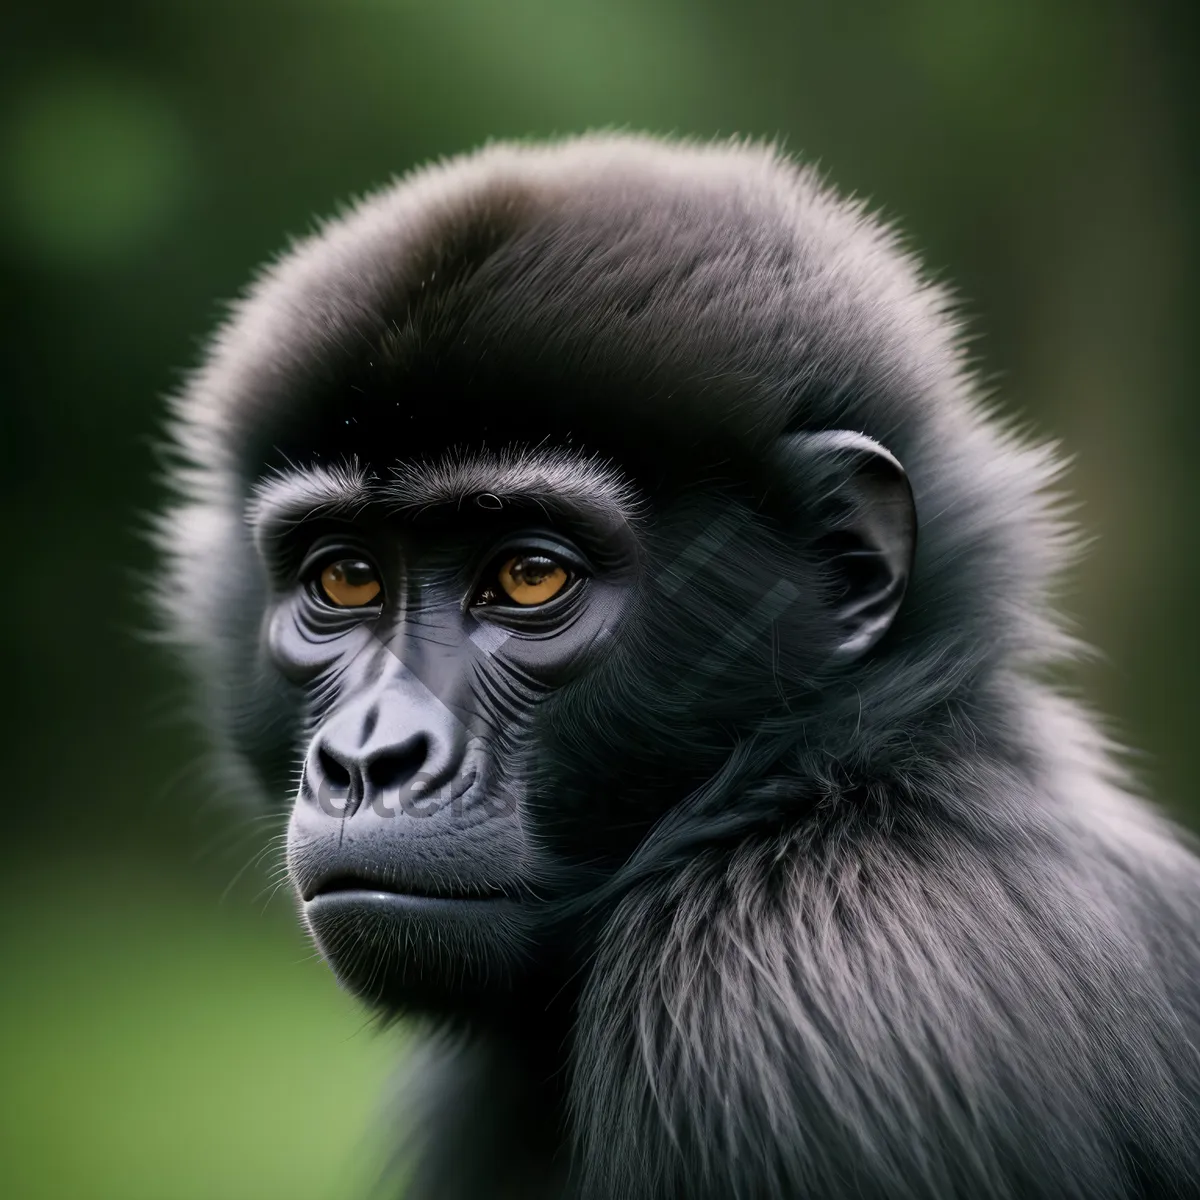 Picture of Endangered primate in natural black fur